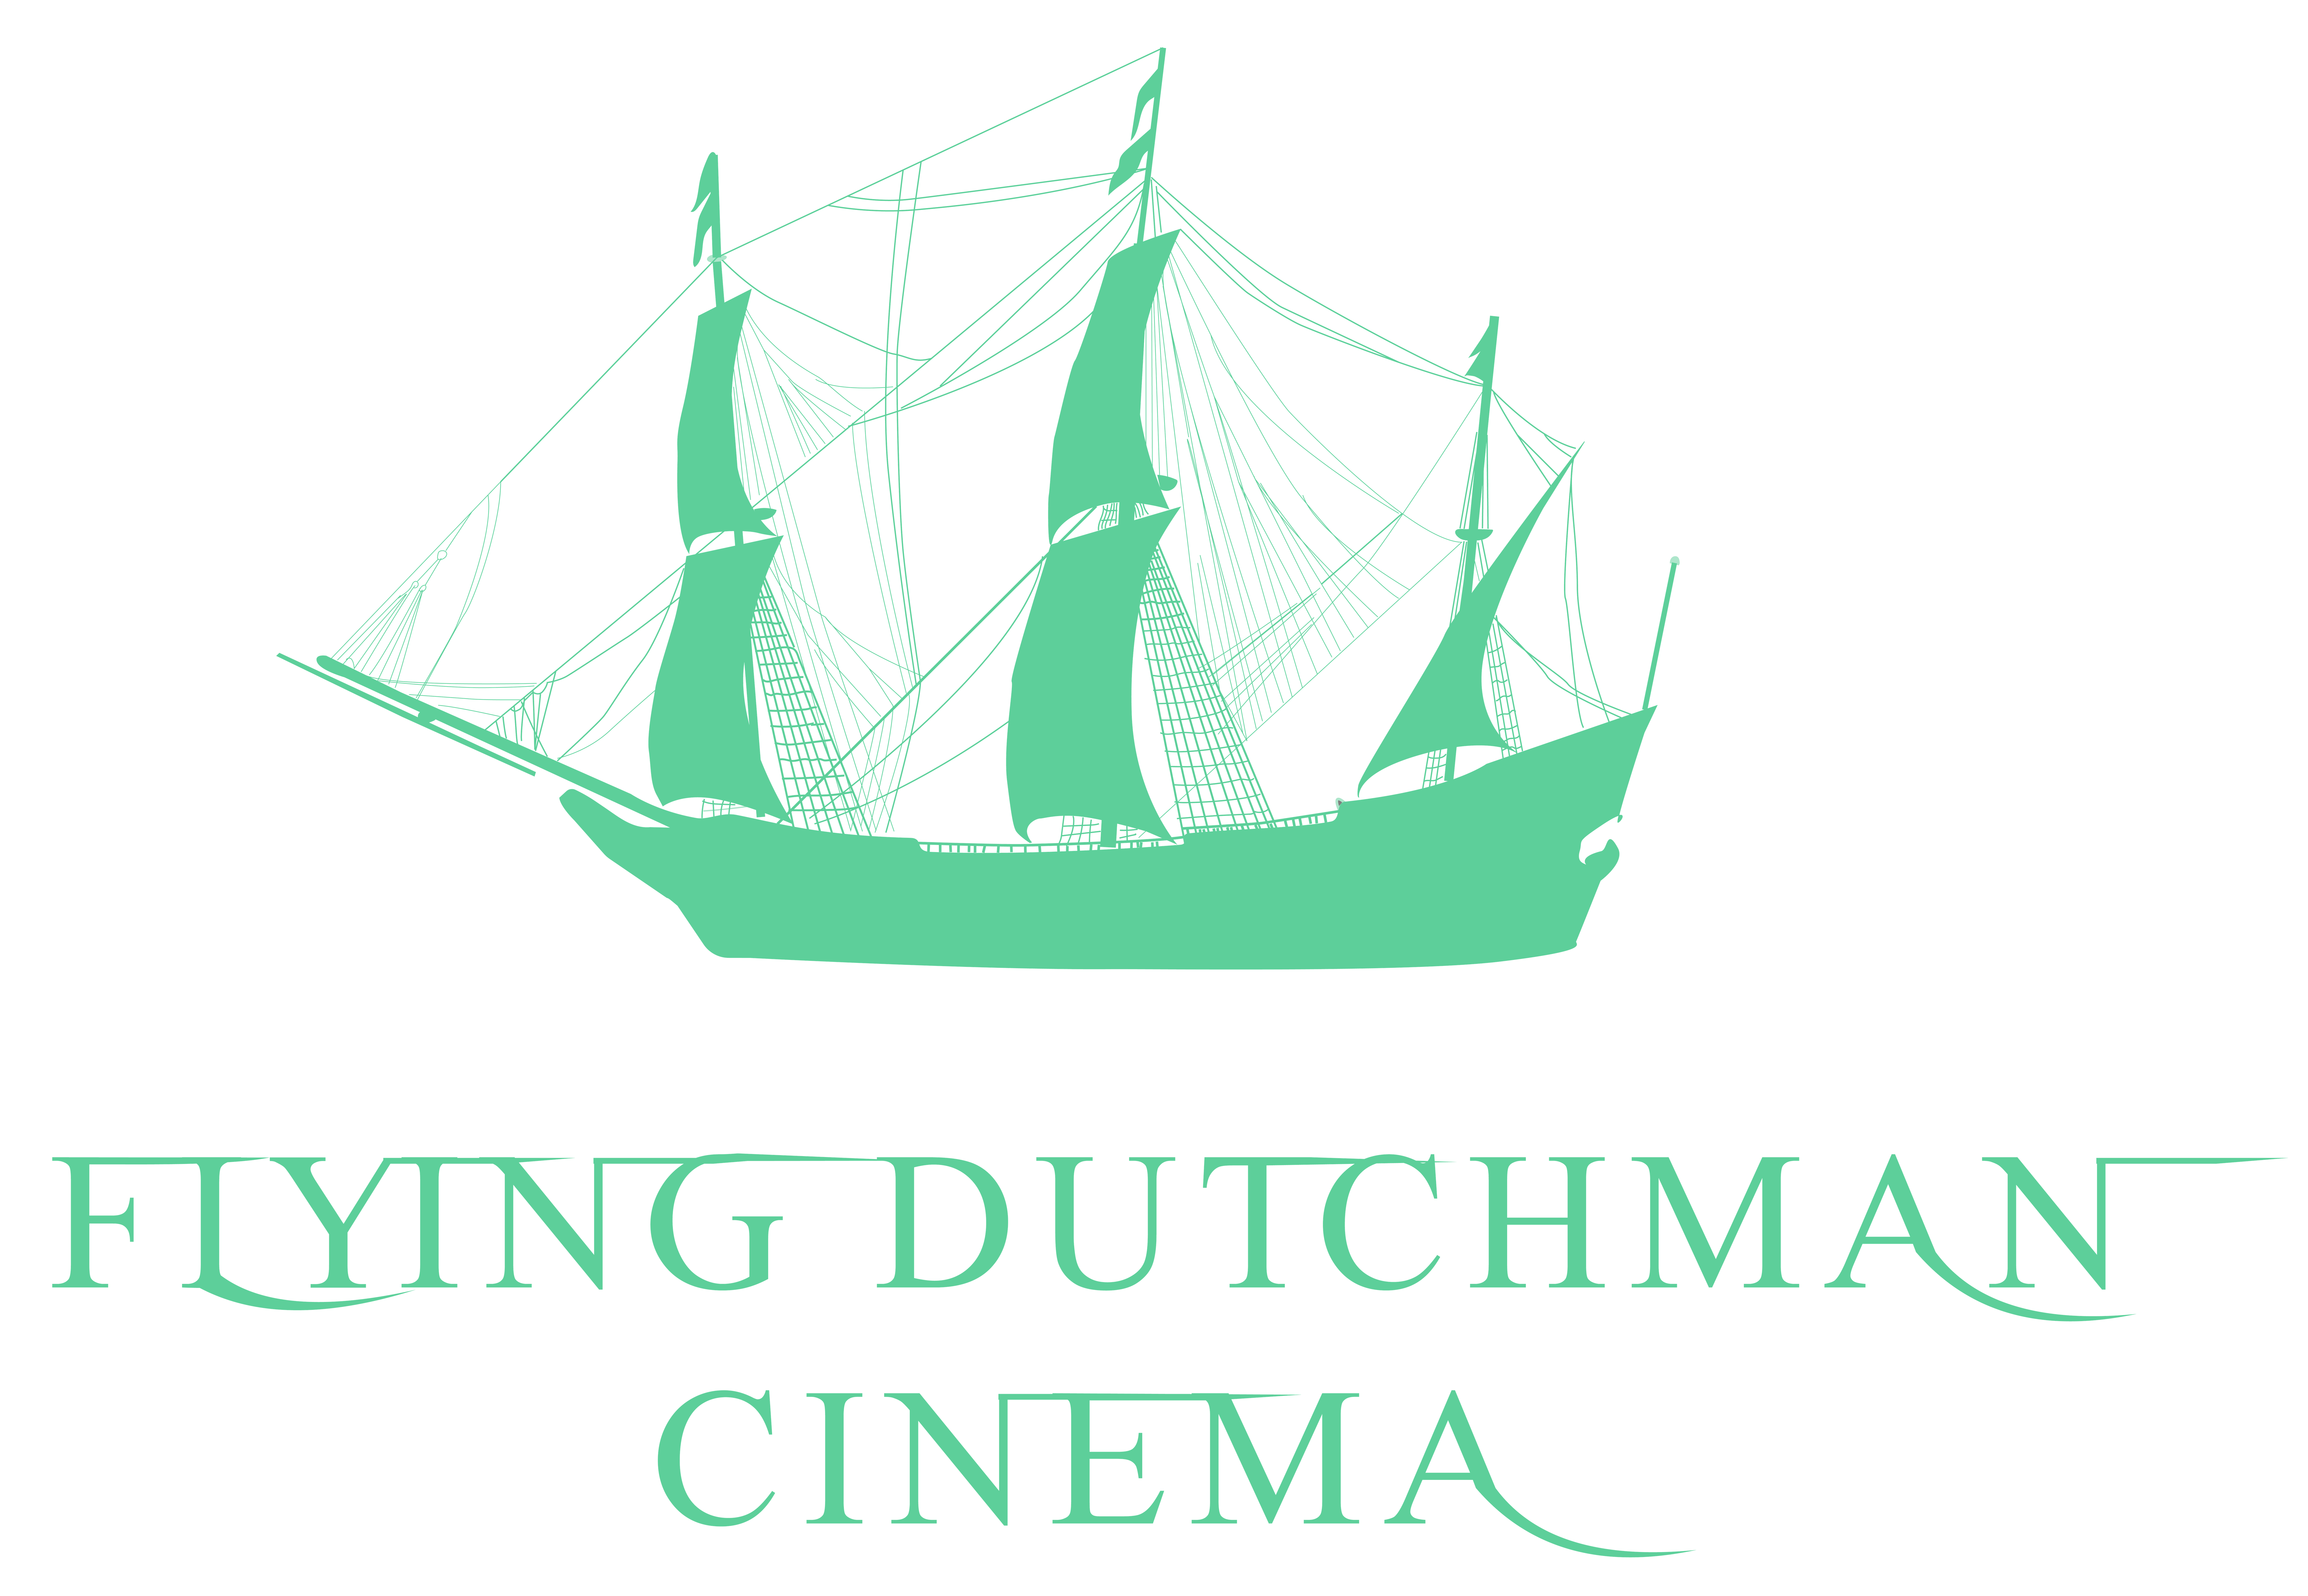 Flying Dutchman Cinema